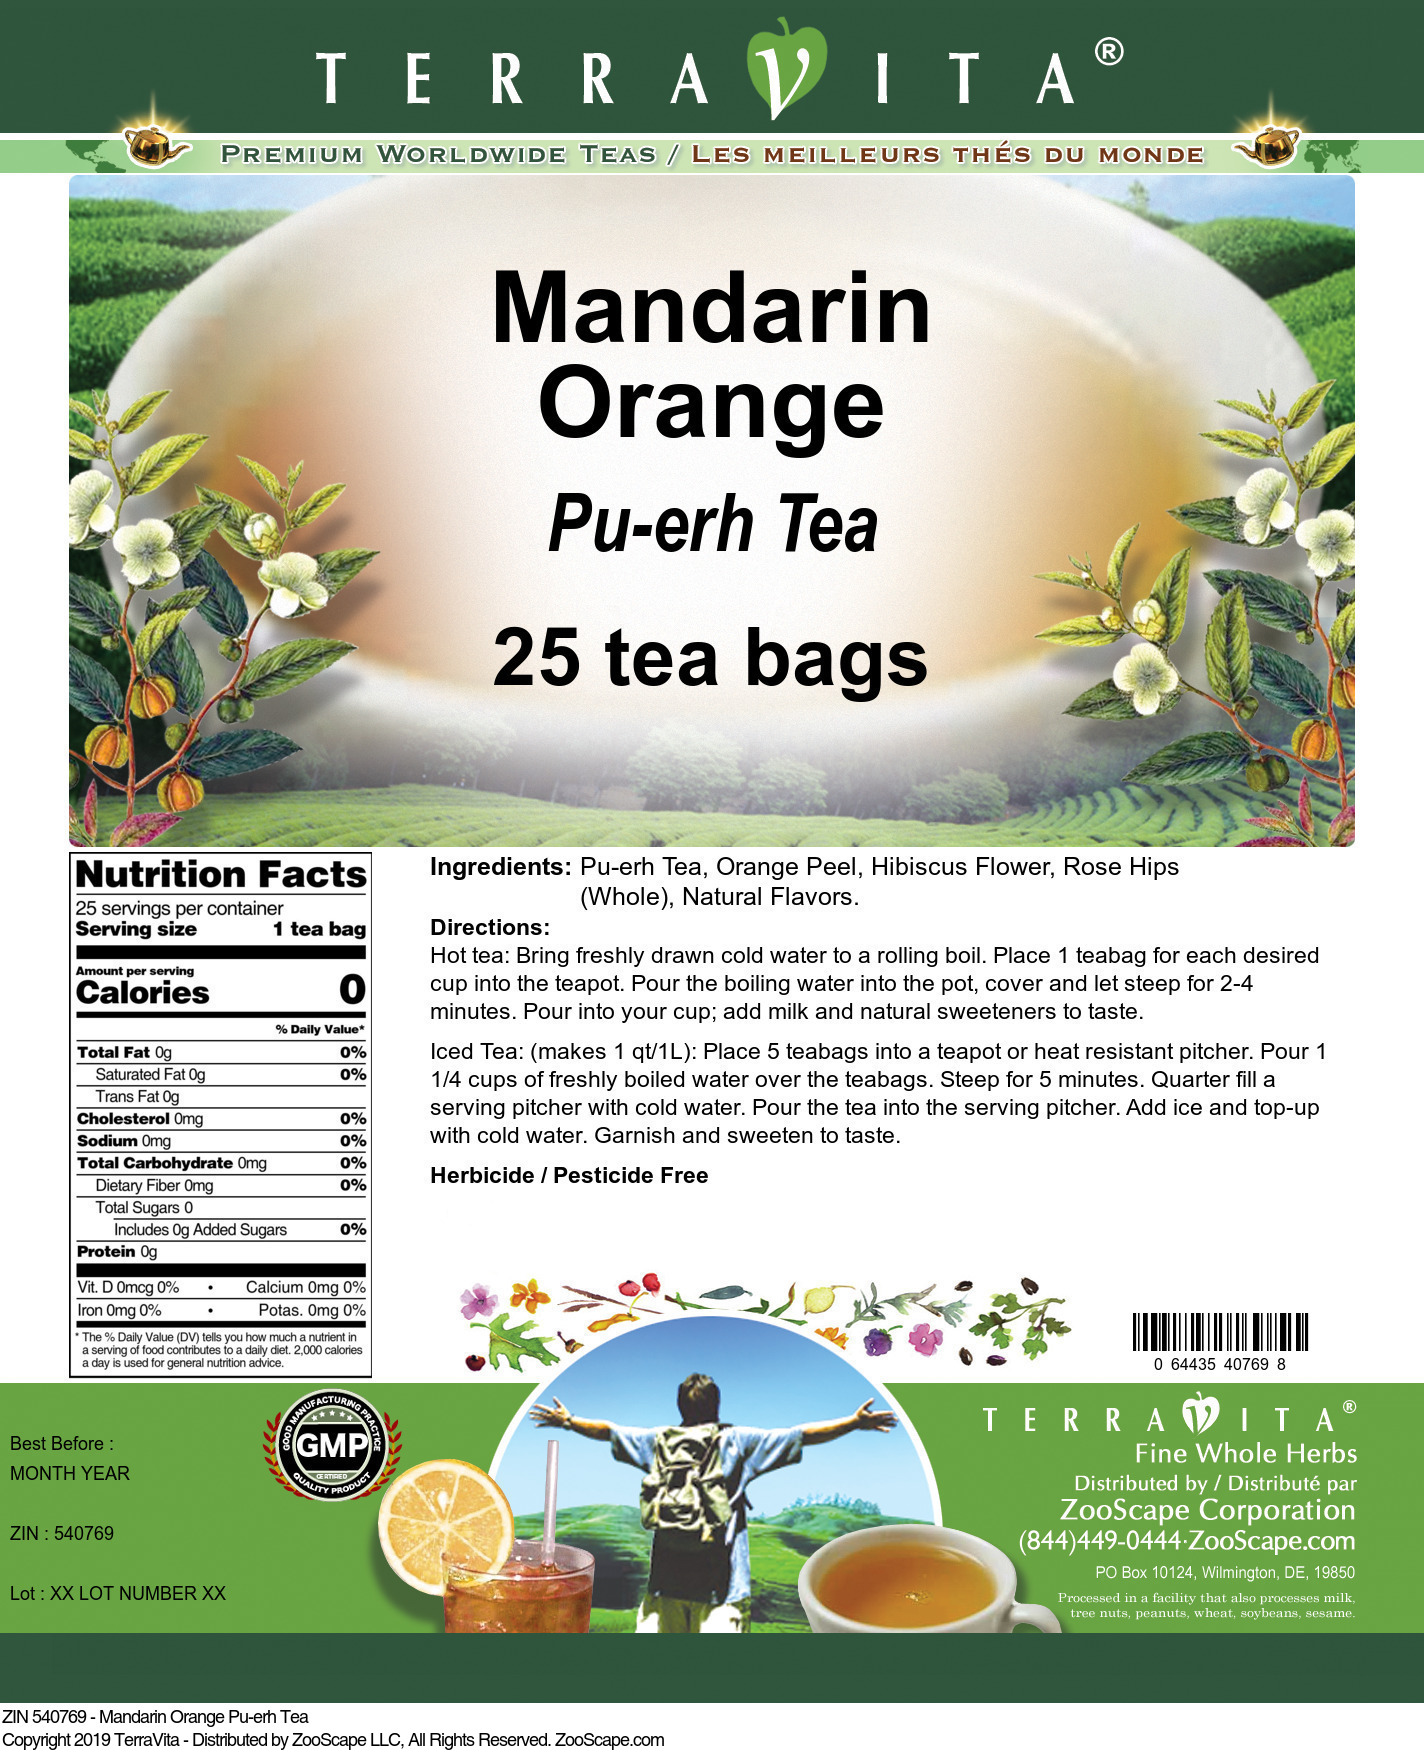 Mandarin Orange Pu-erh Tea - Label